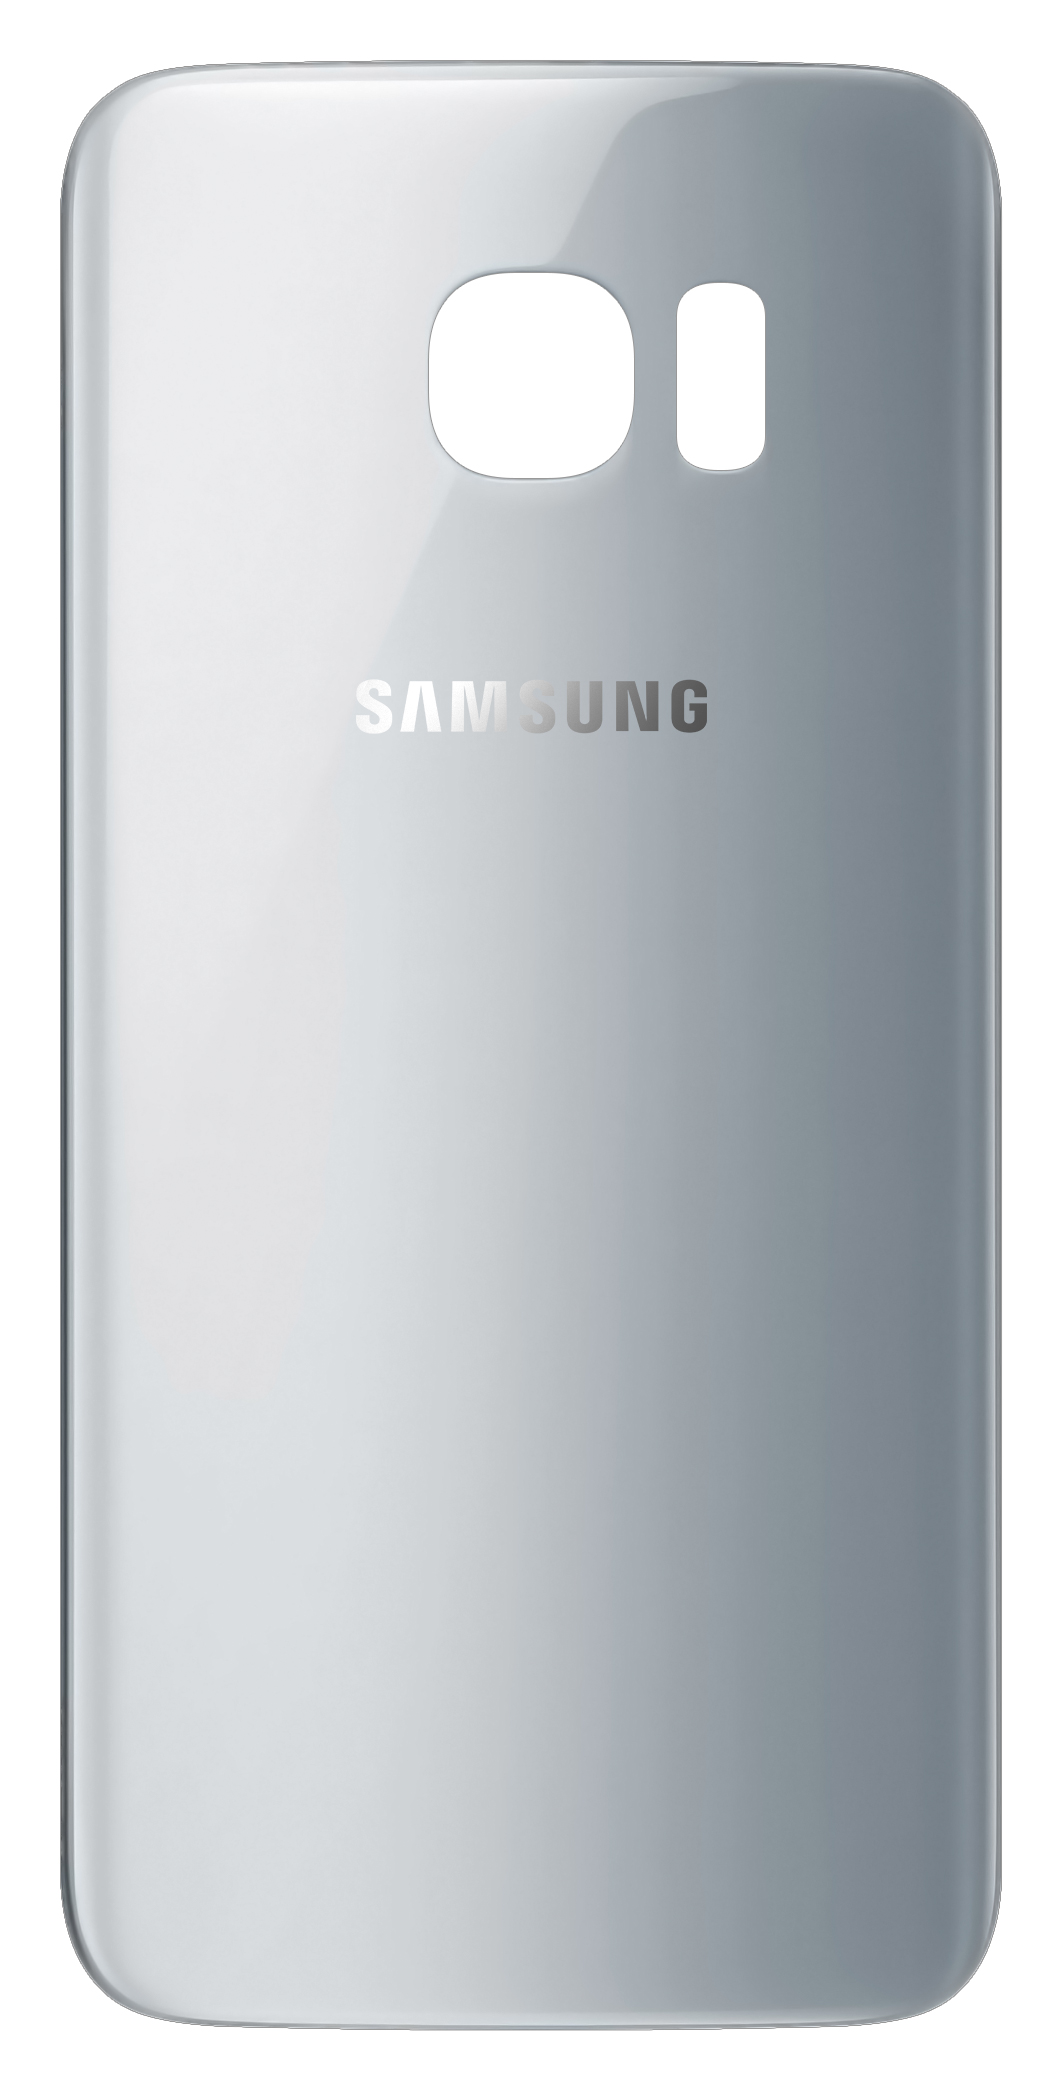 capac-baterie-samsung-galaxy-s7-g930-2C-argintiu-